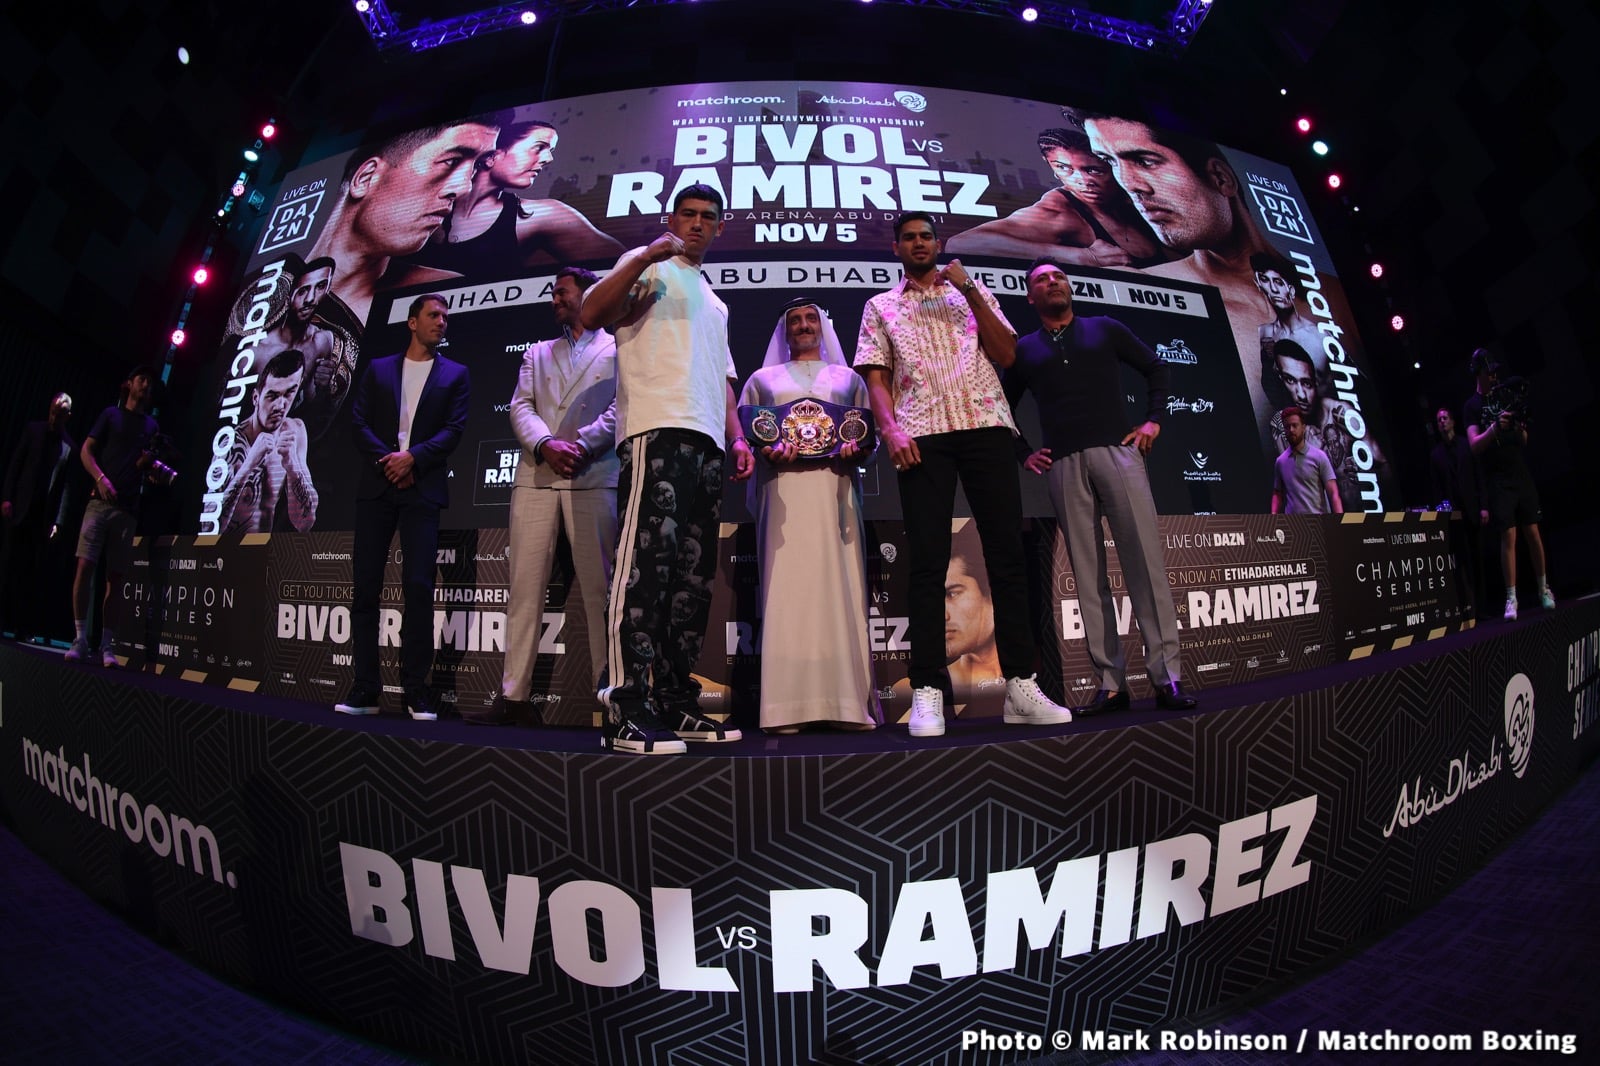 Image: What time is Ramirez vs Bivol tonight?